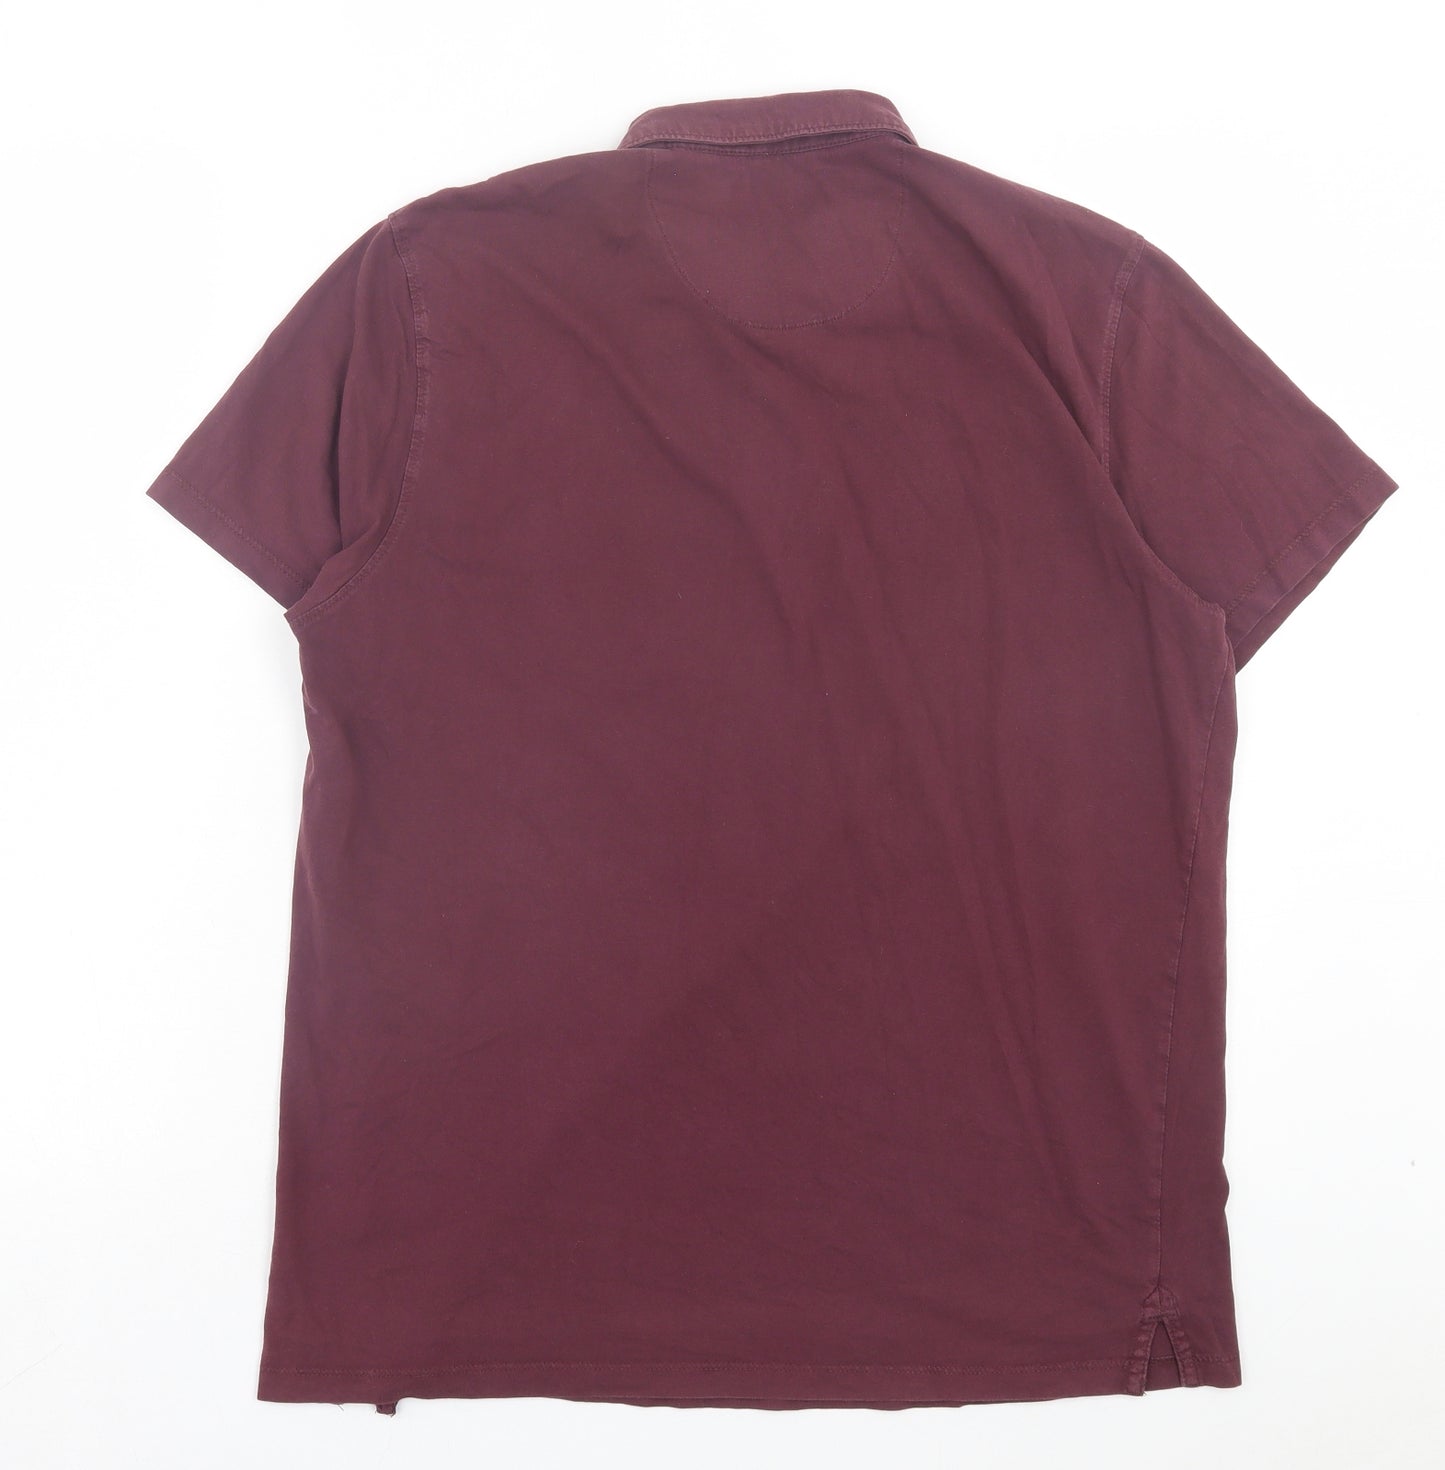 NEXT Mens Purple Cotton Polo Size L Collared Button - Pocket Detail